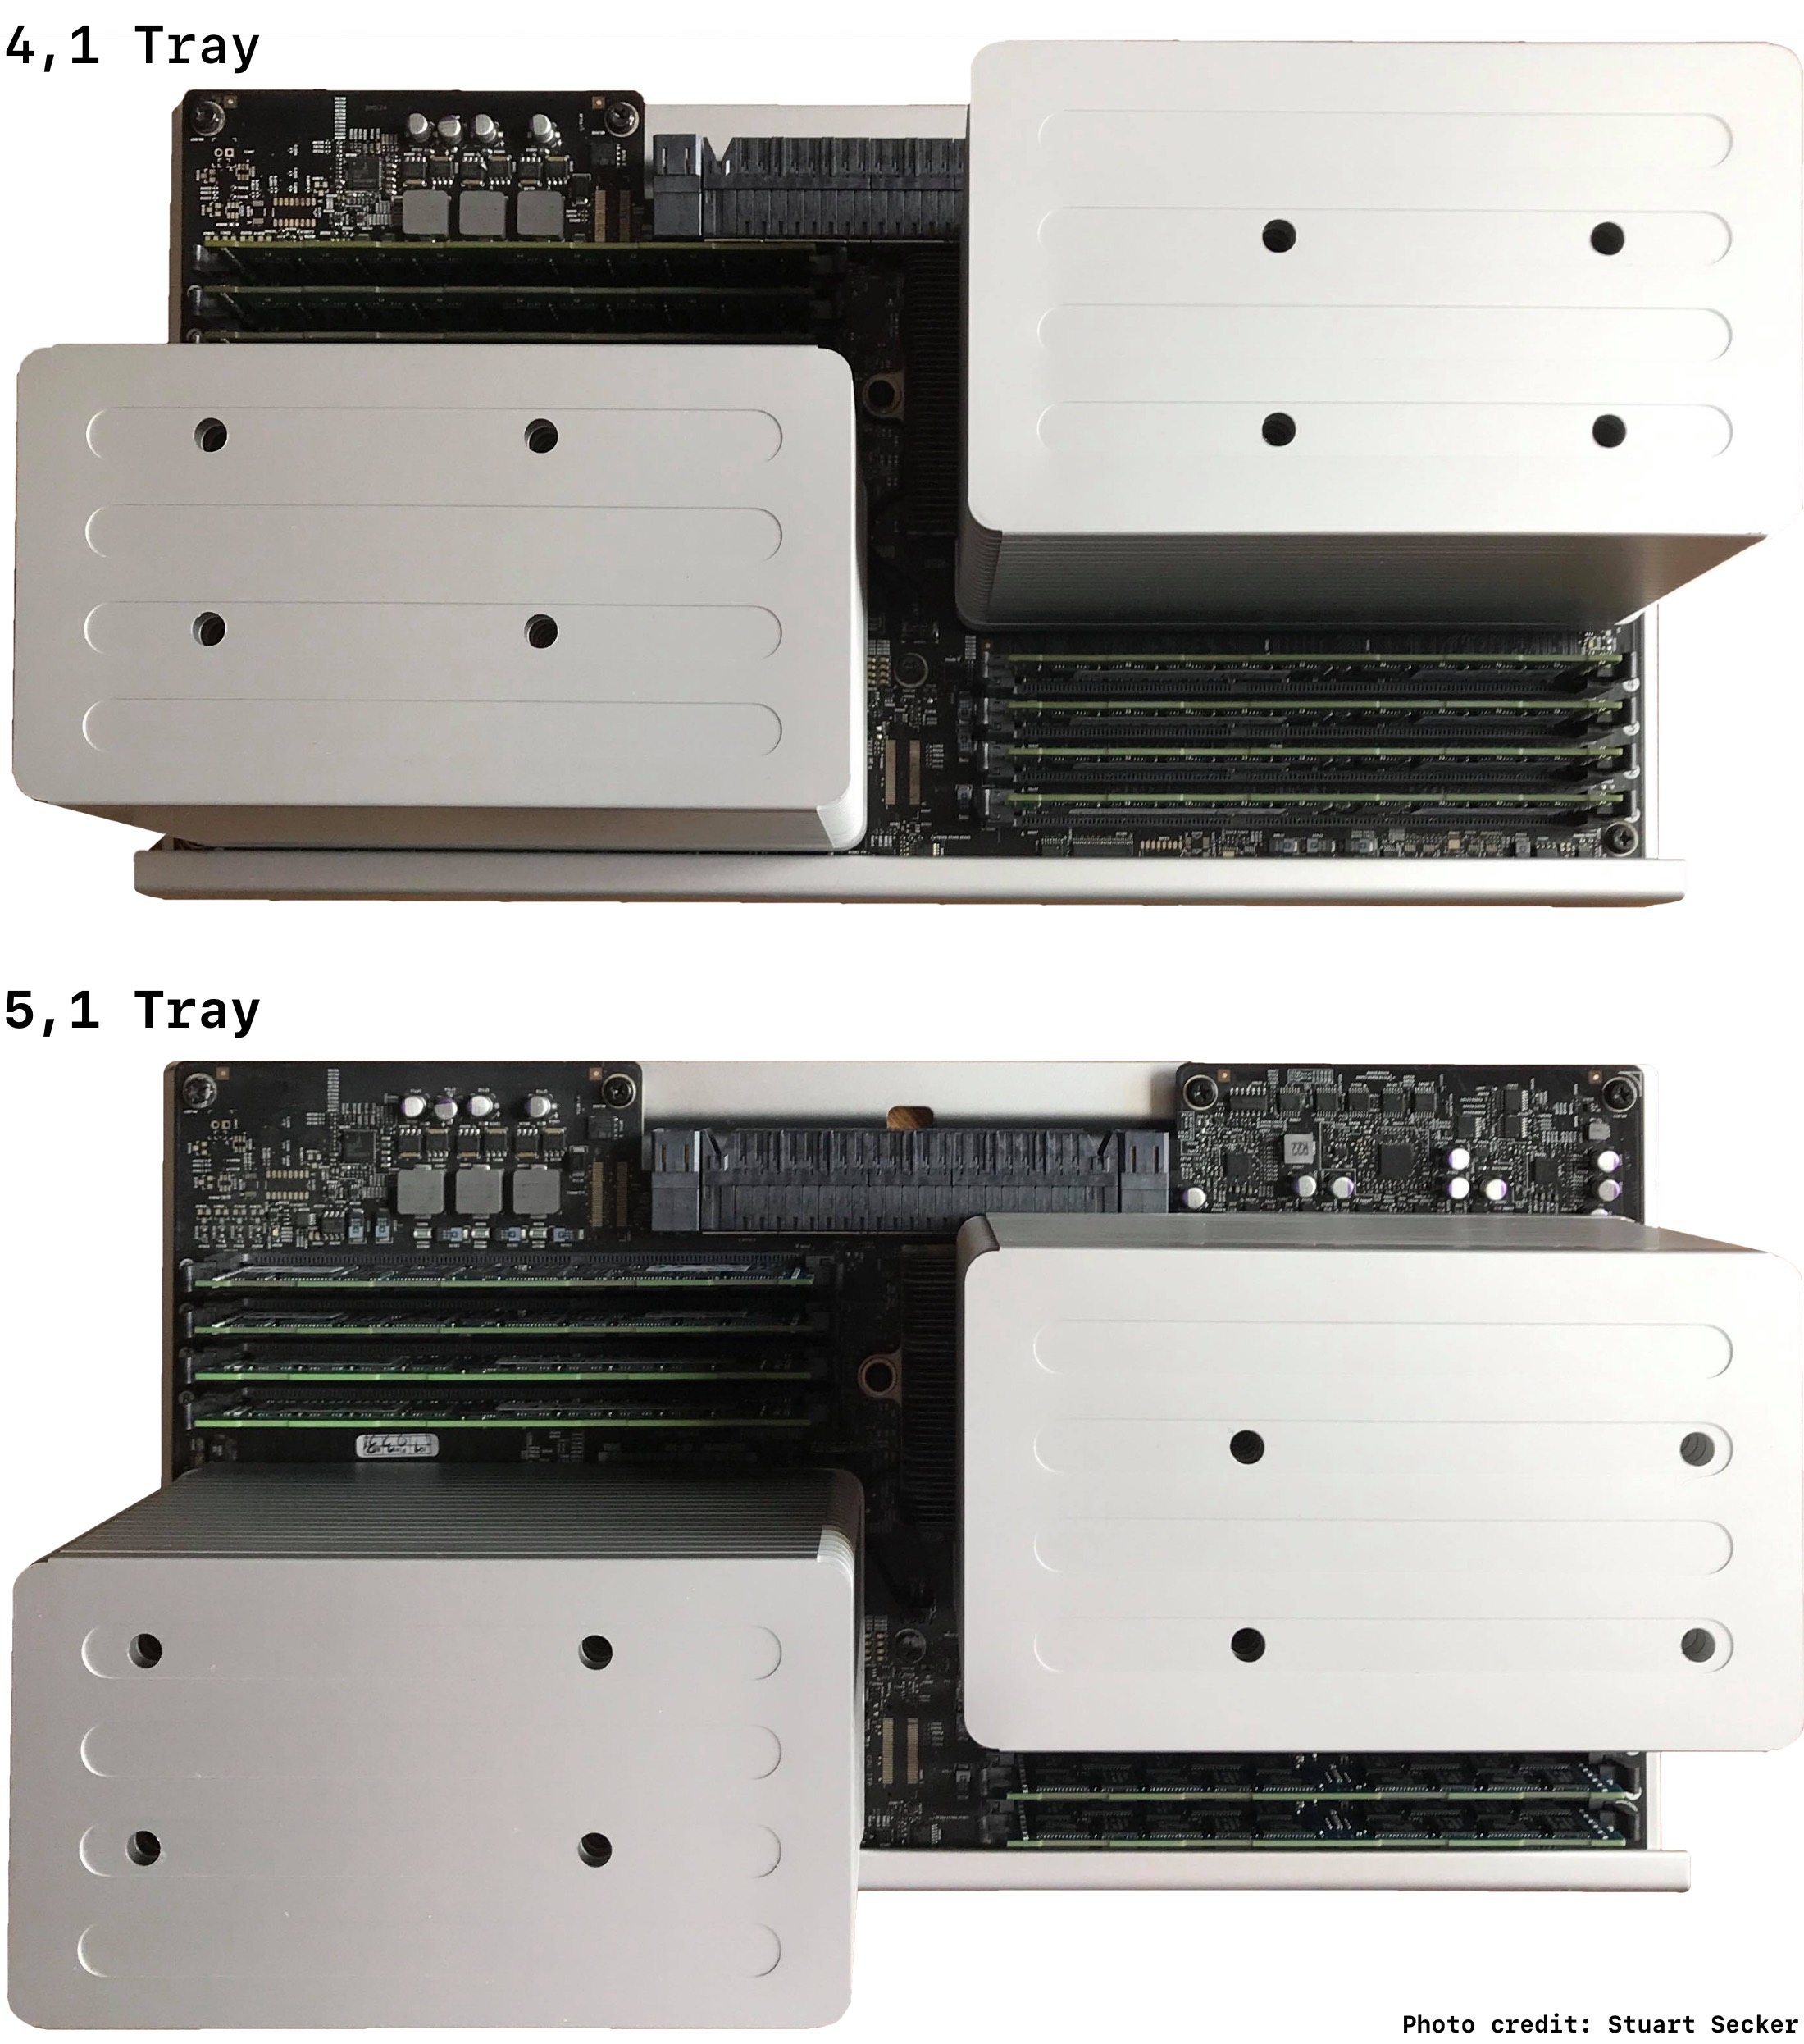 Mac Pro 5,1 and 4,1 CPU tray